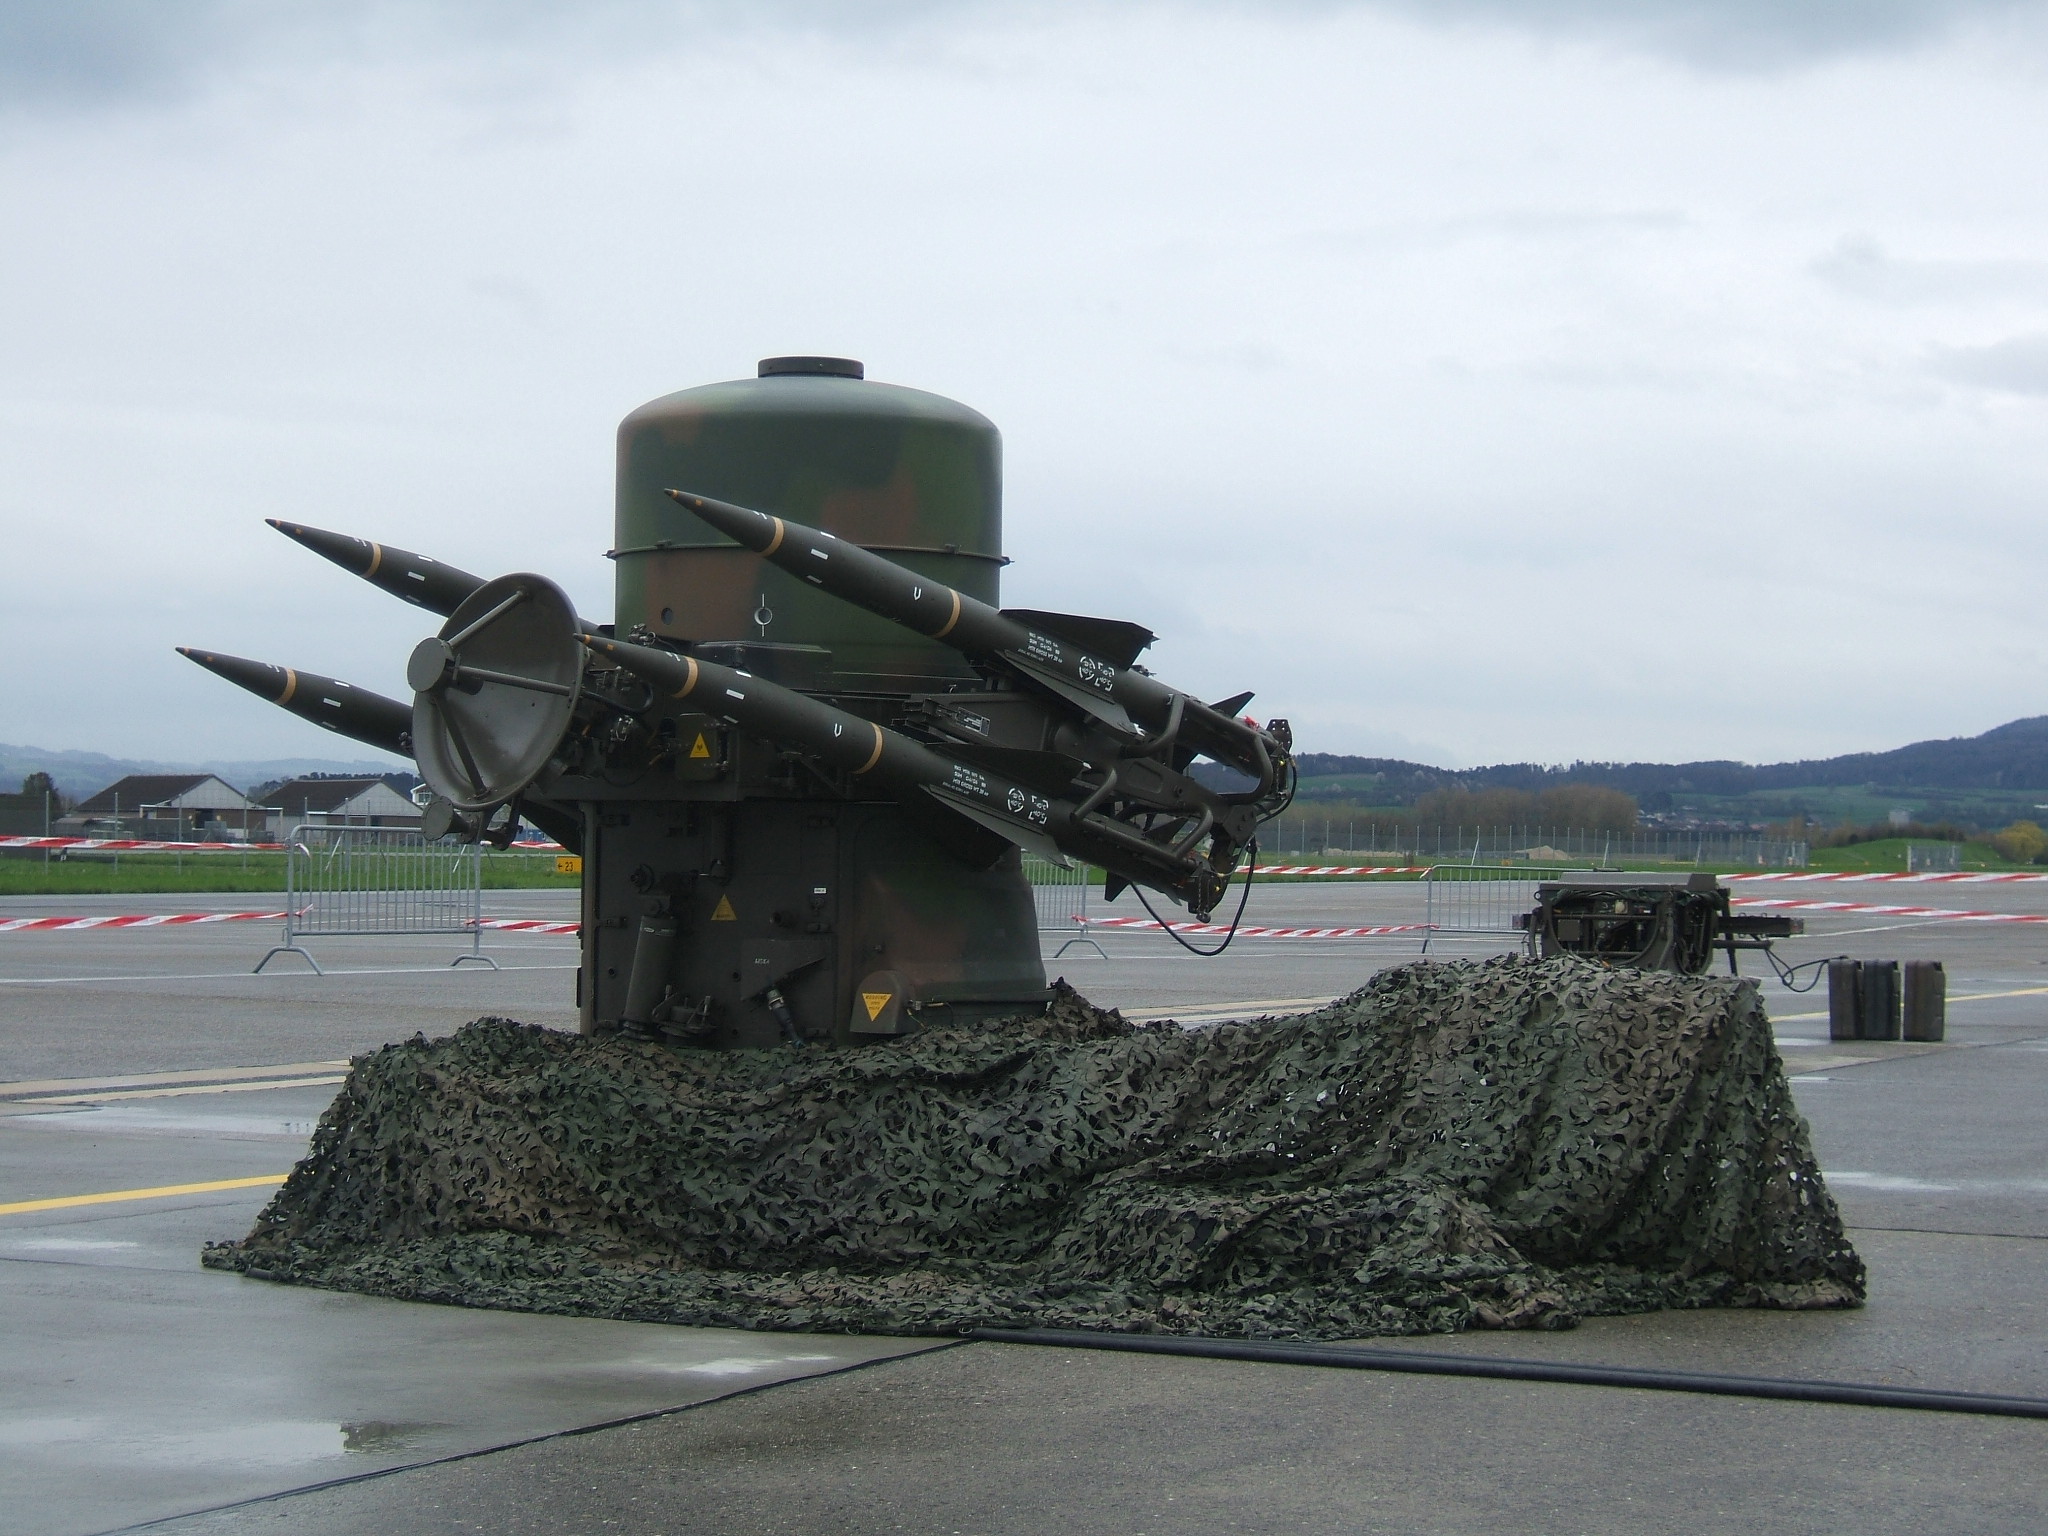 http://upload.wikimedia.org/wikipedia/commons/1/1f/Swiss_rapier_missile.jpg